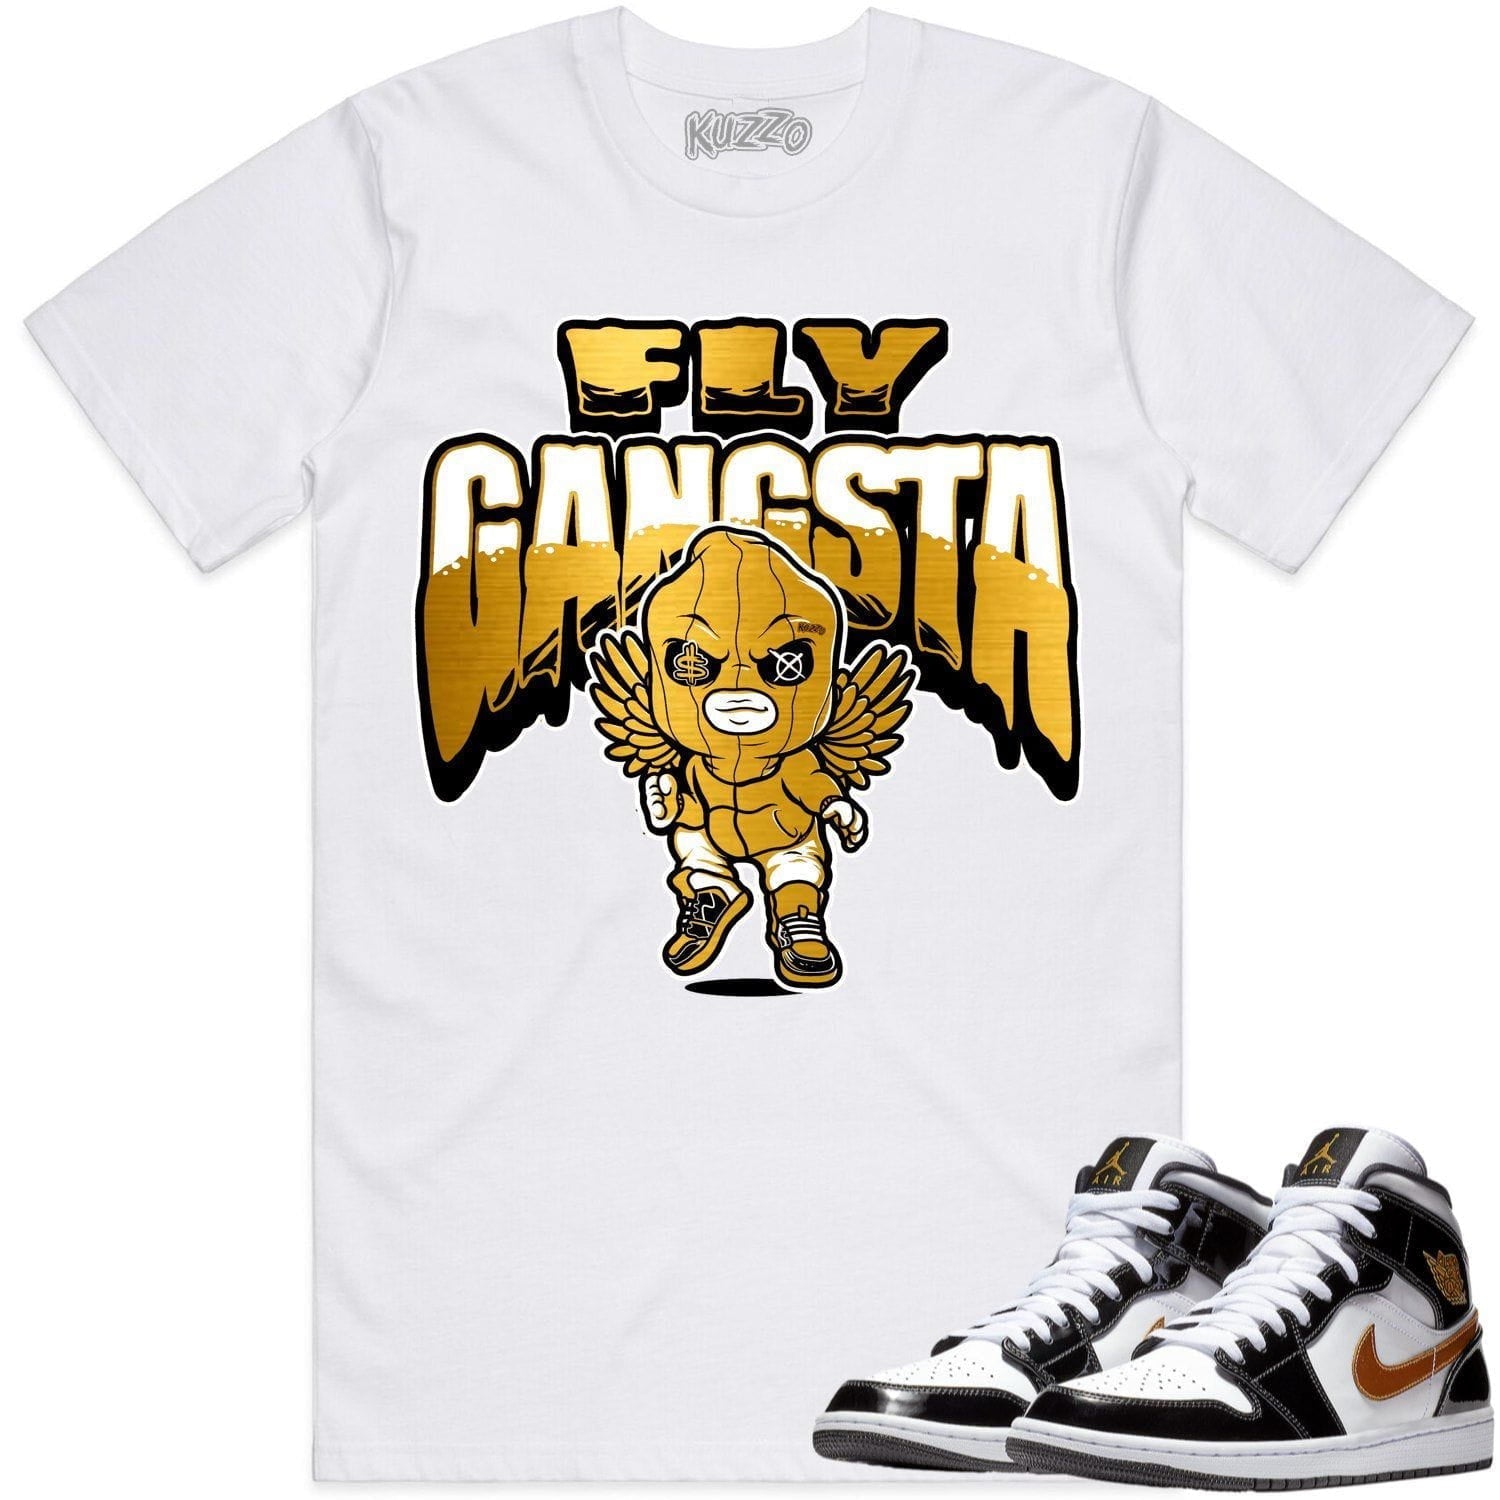 Jordan 1 Mid Patent Black Metallic Gold Shirts - Gratitude Fly Gangsta